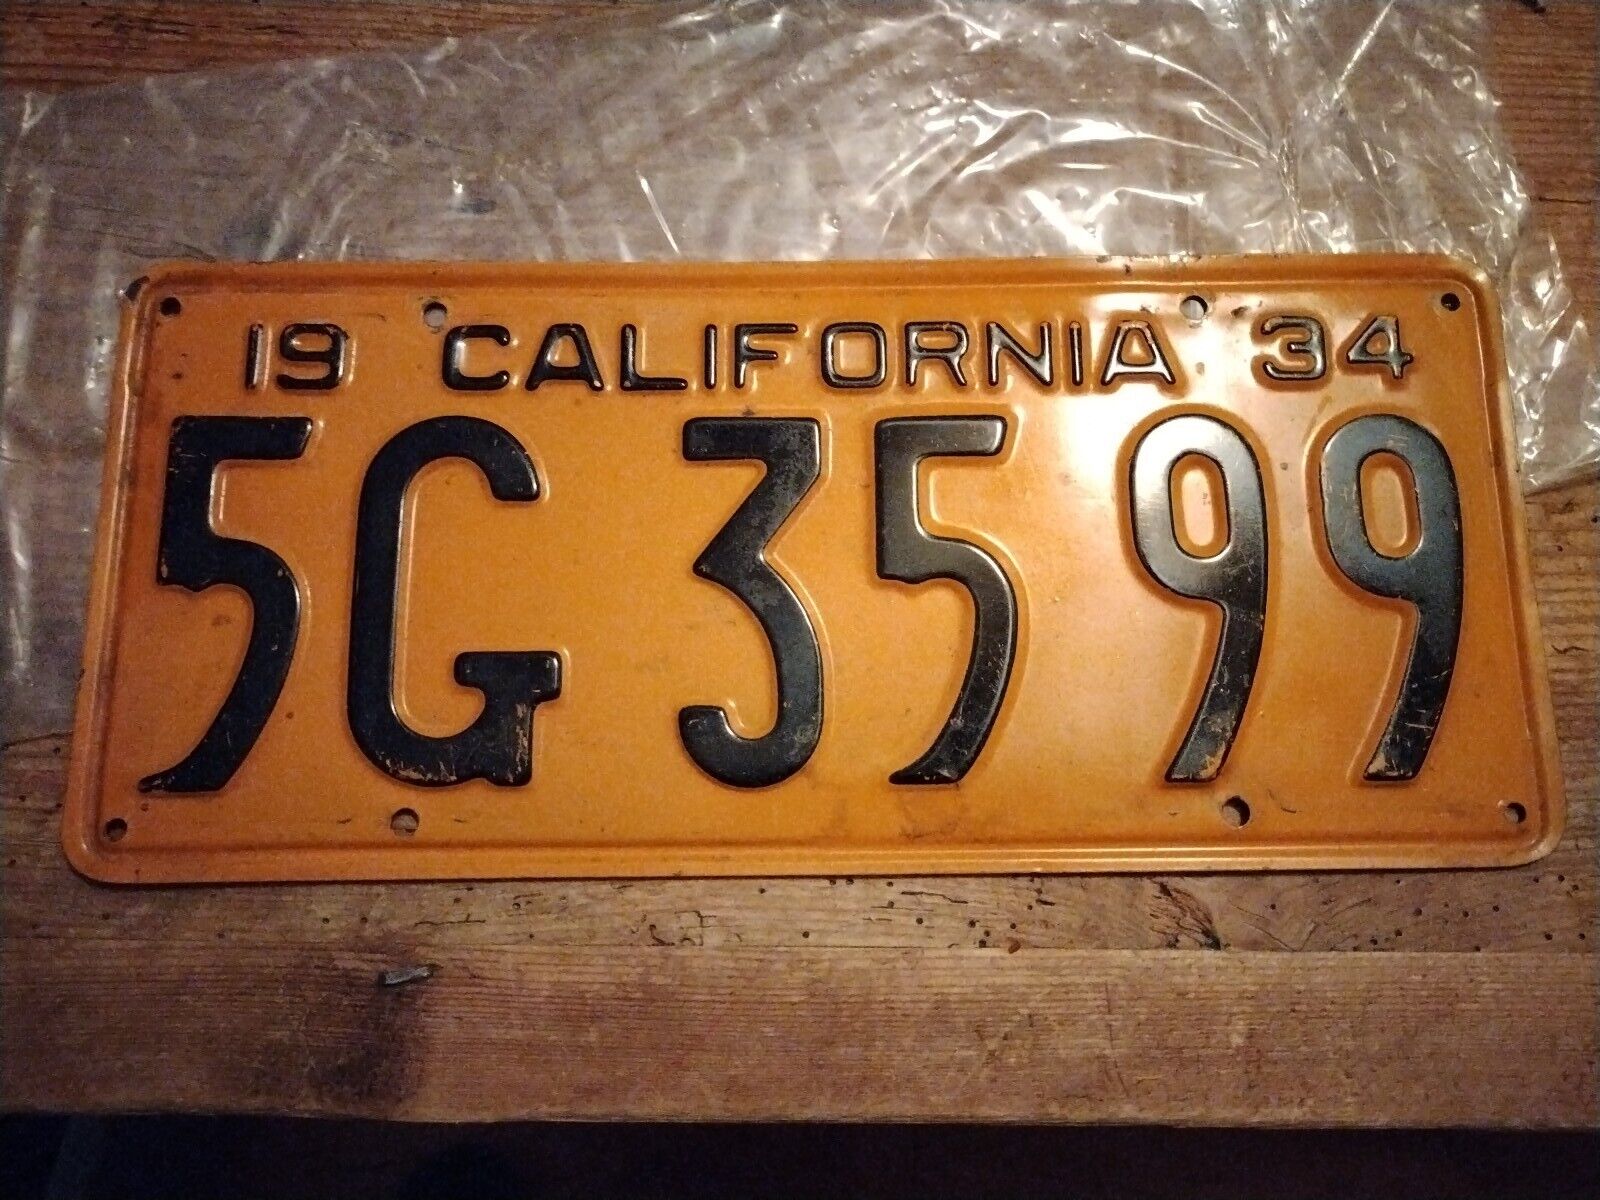 1934 Vintage California license plate.# 5G 35 99